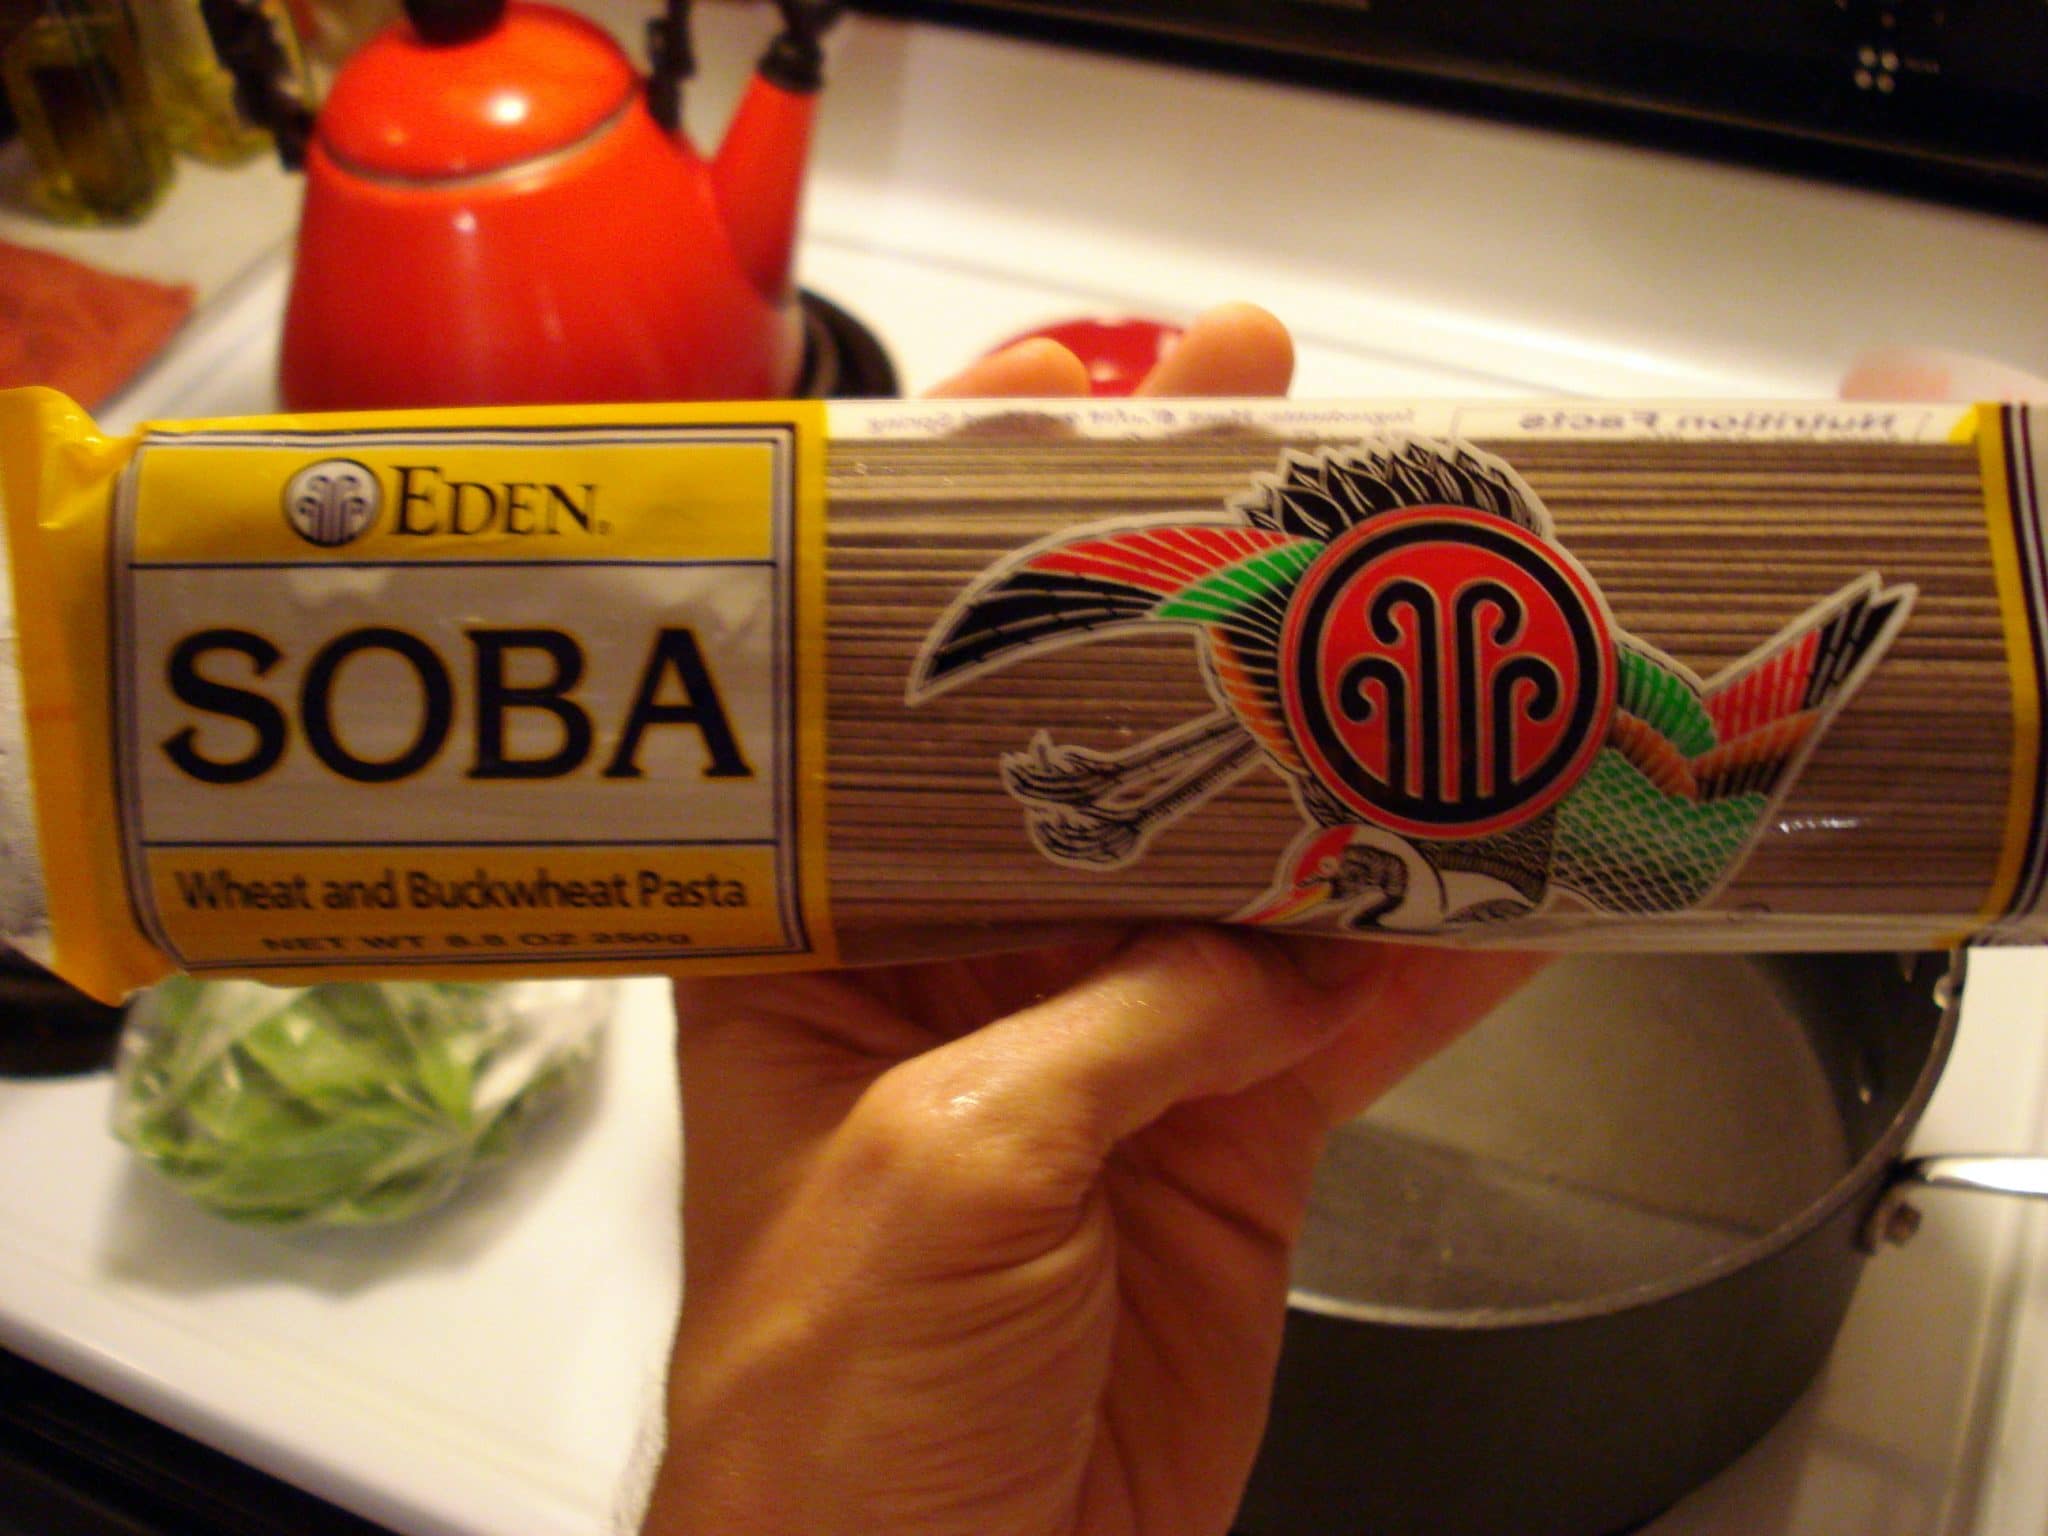 Eden wheat and buckwheat soba pasta